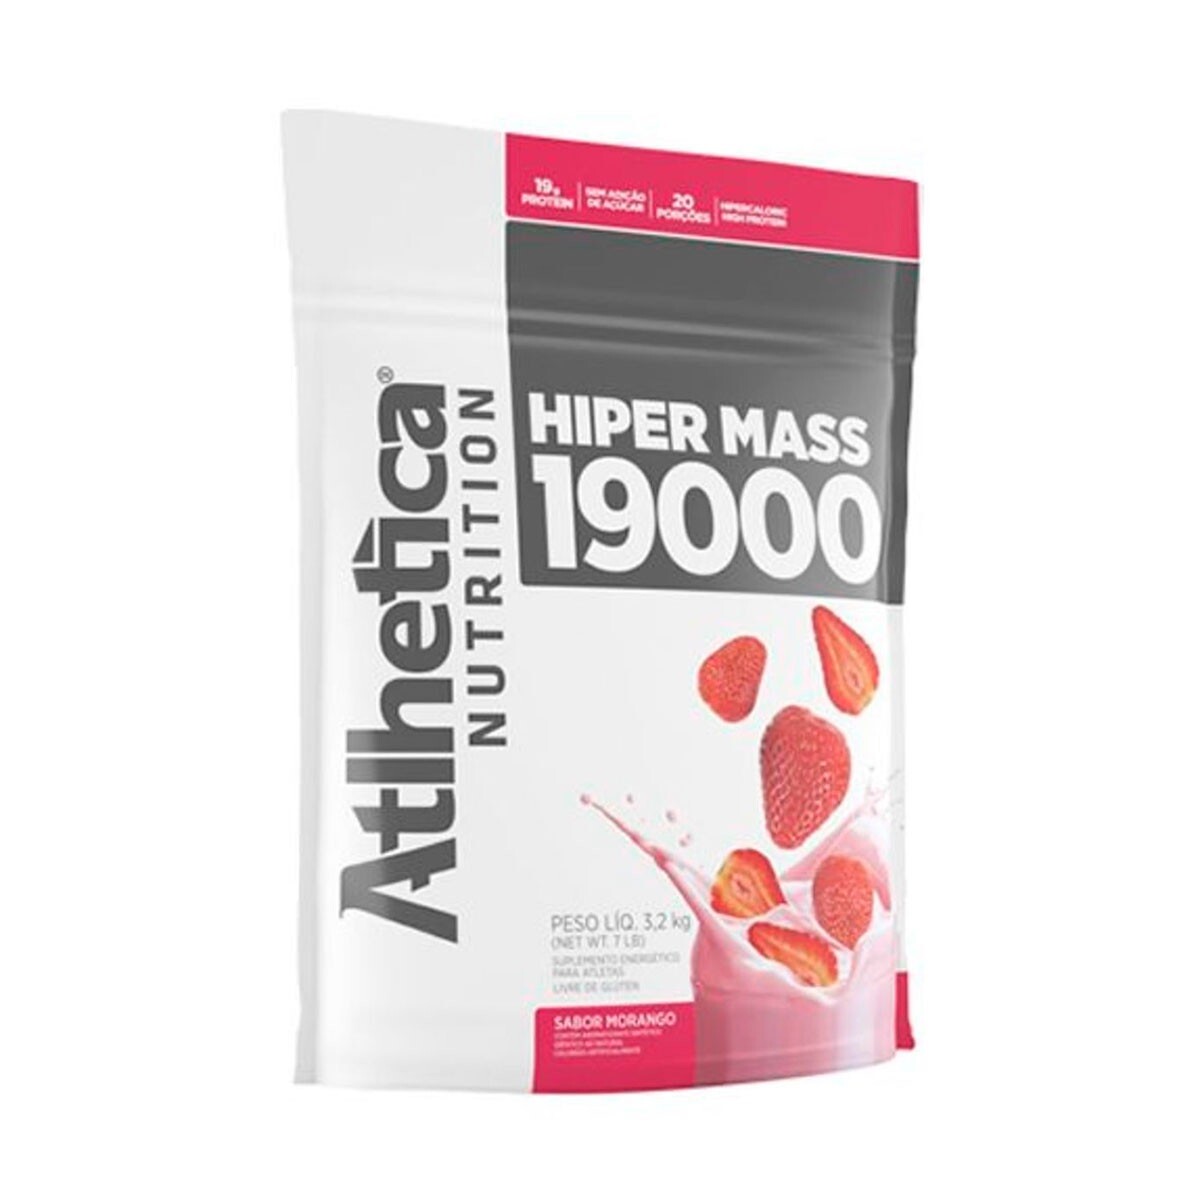 Hiper Mass 19000 Atlhetica Nutrition Sabor Frutilla 3,2 Kgs. 